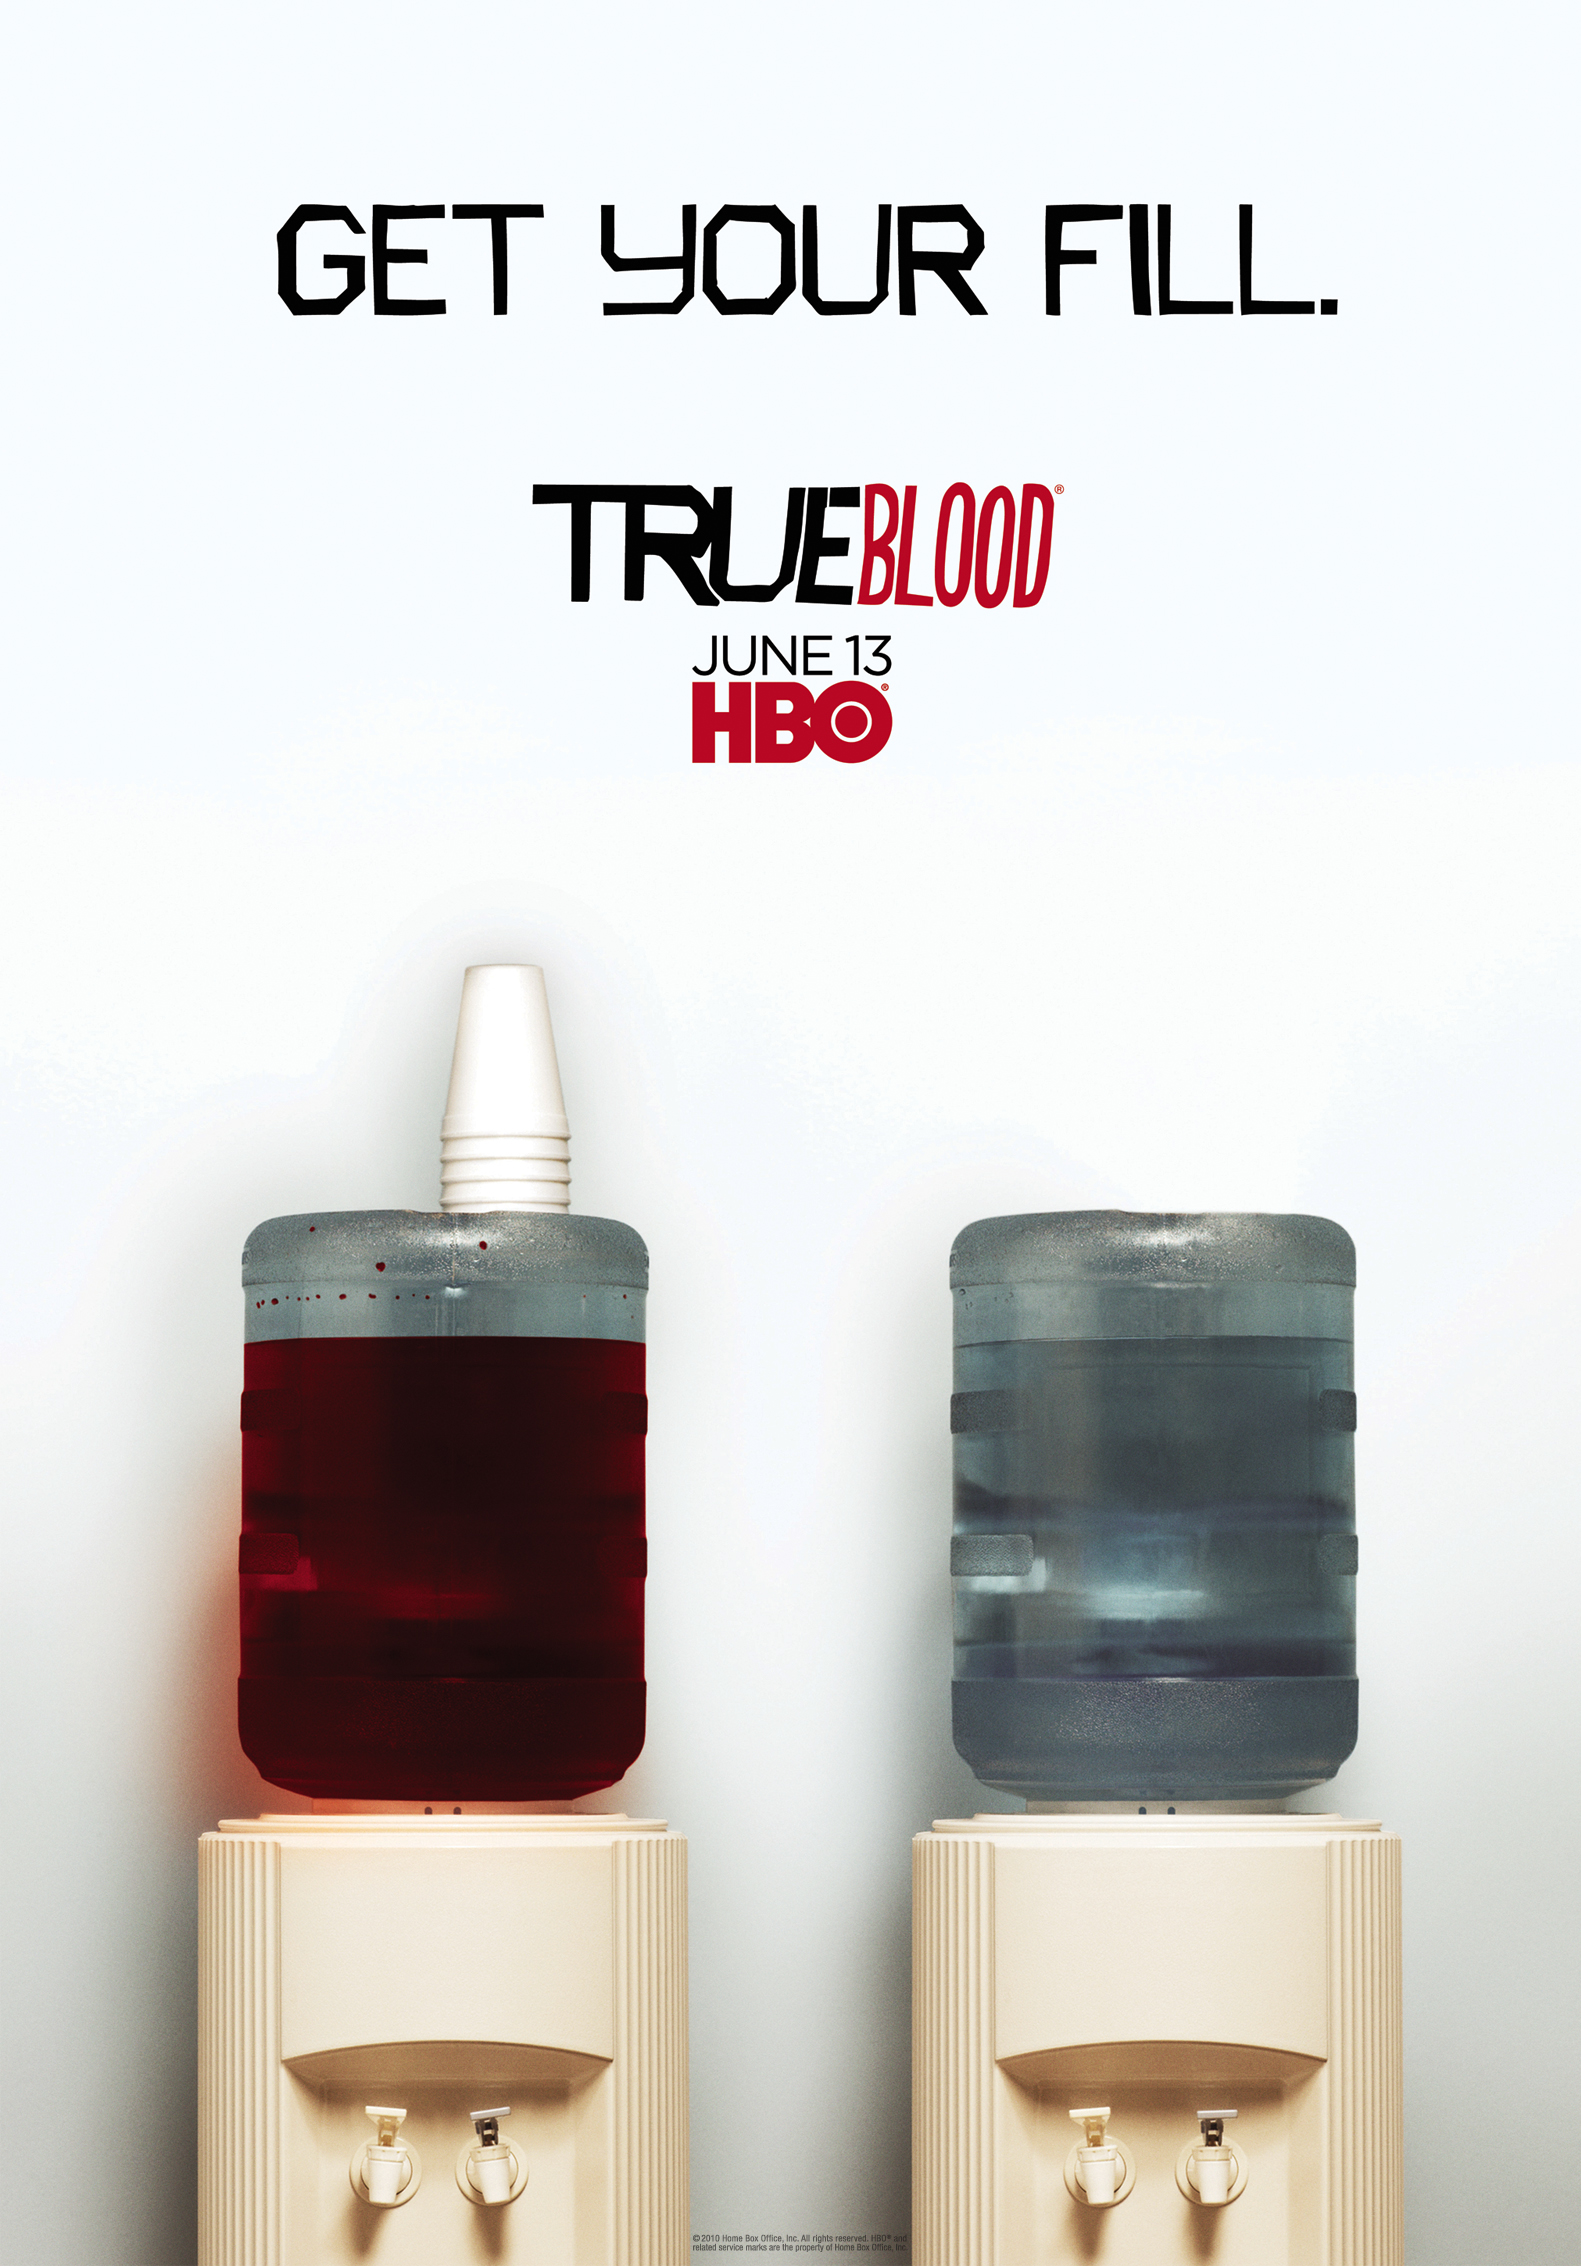 true-blood-season-3-poster-get-your-fill.jpg